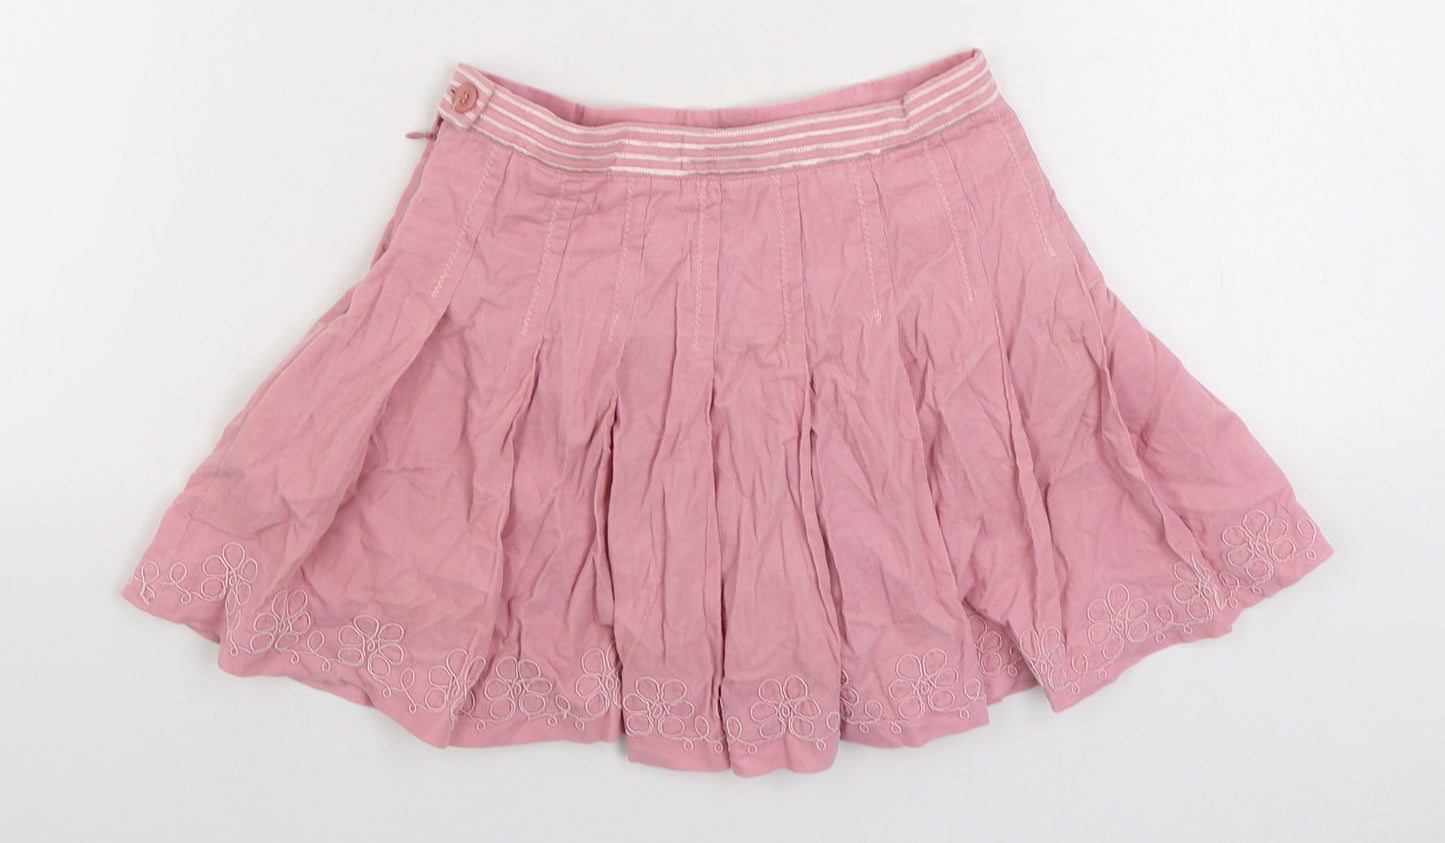 Campus Girls Pink Cotton Pleated Skirt Size 5 Years Regular Zip